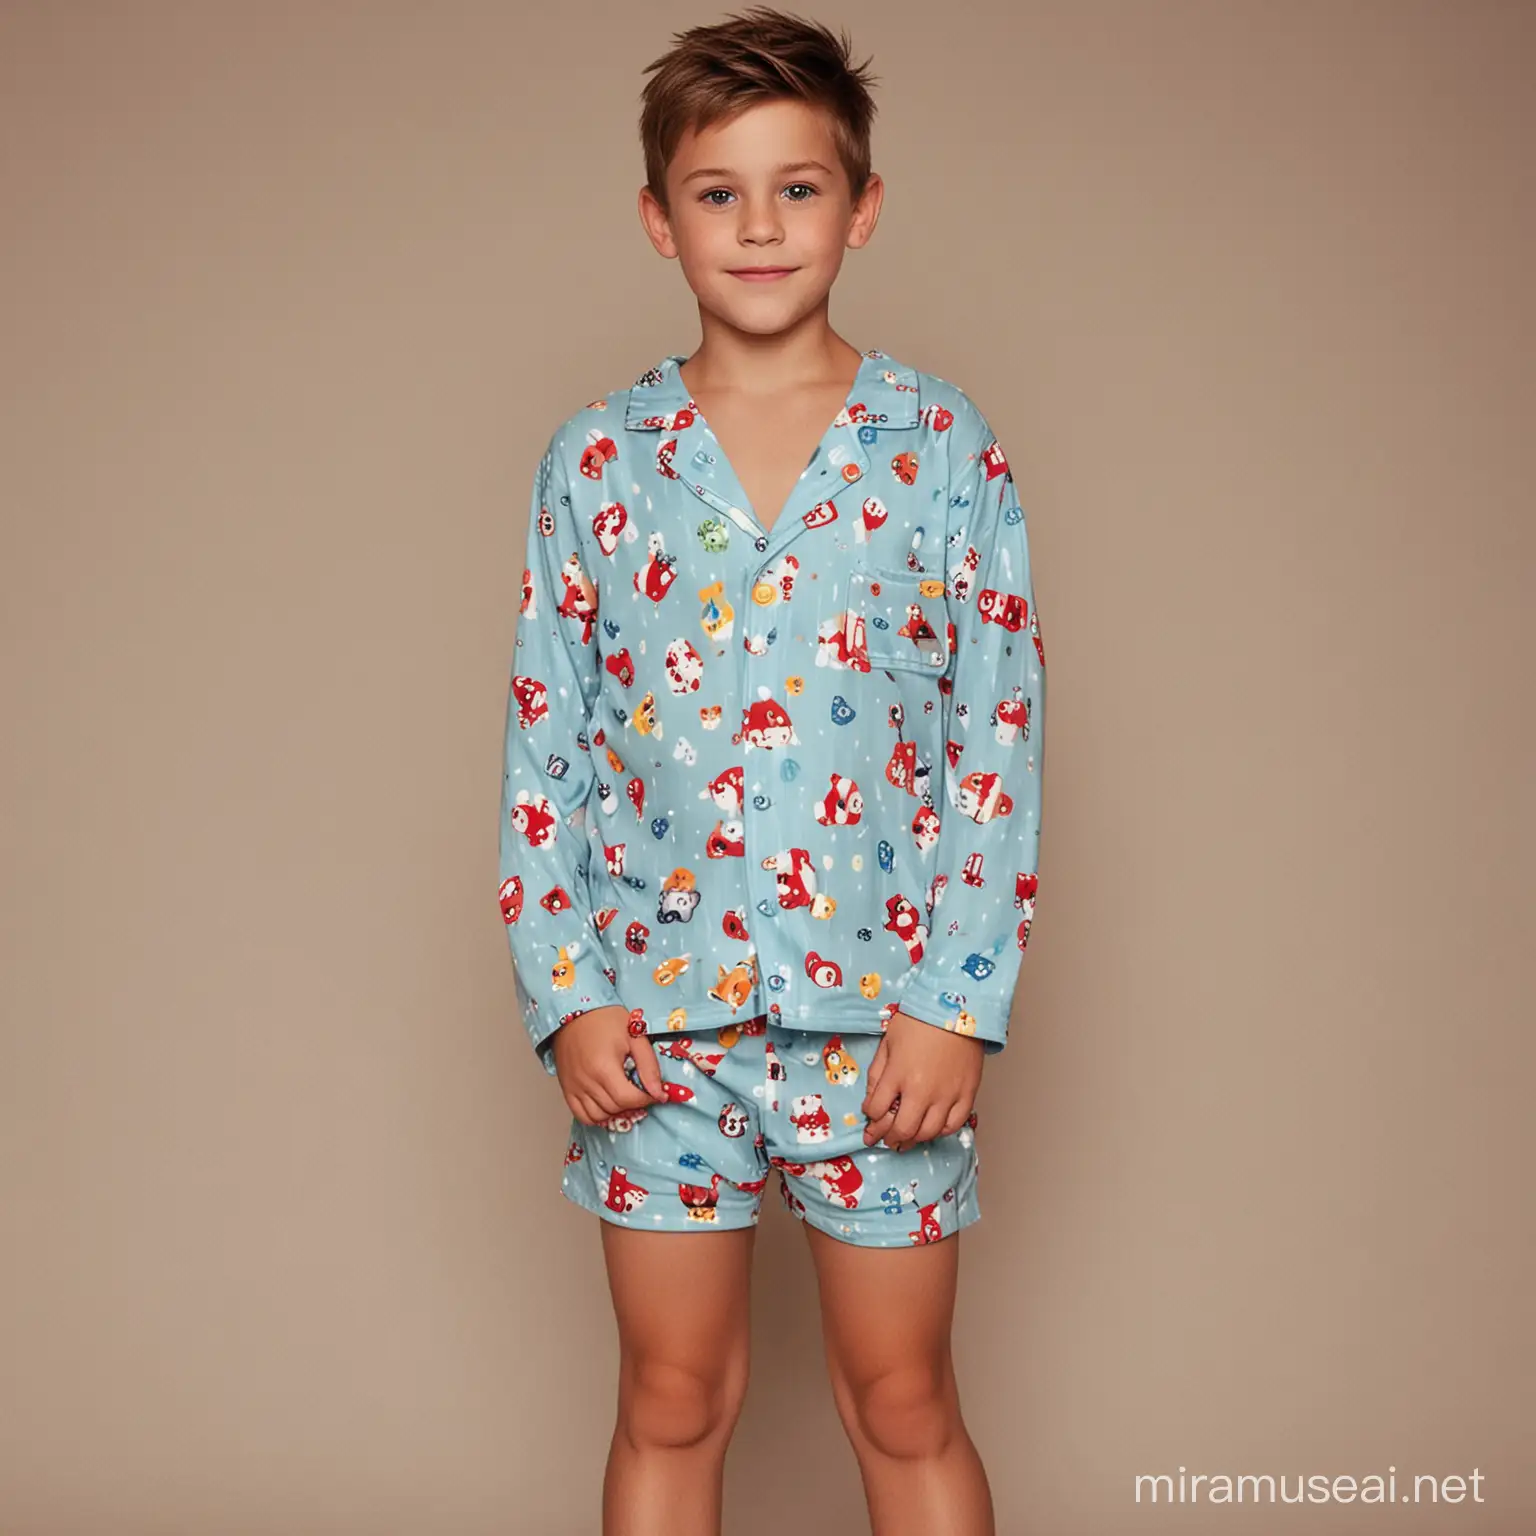 Cute boy in pijamas but no pants